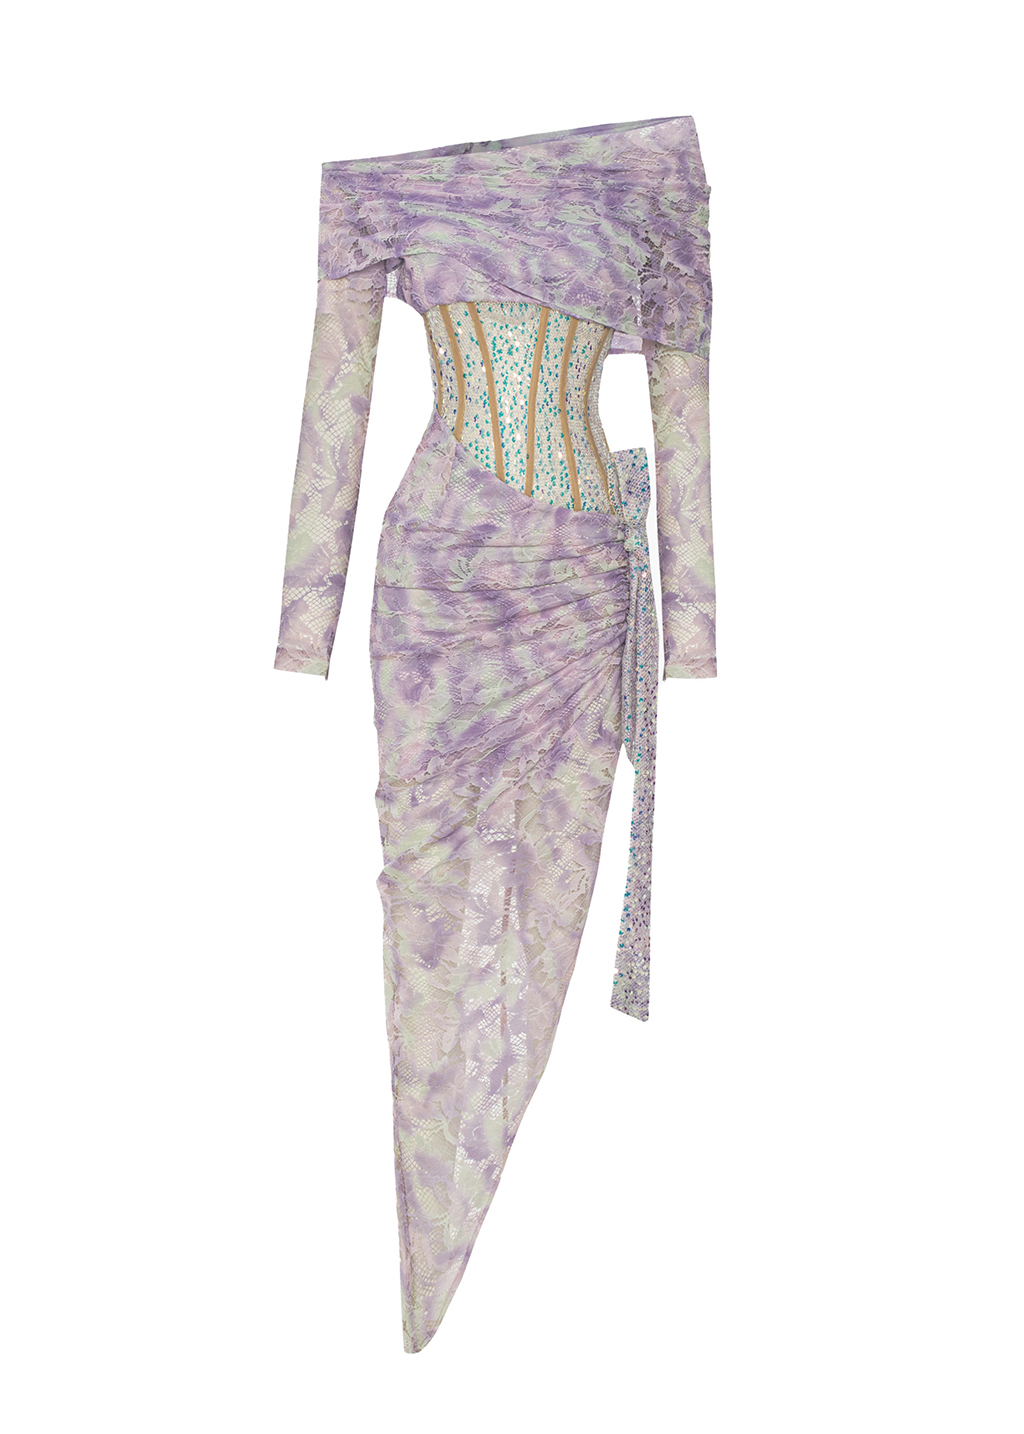 Seqined Lace Long Sleeve Asymmetrical Dress